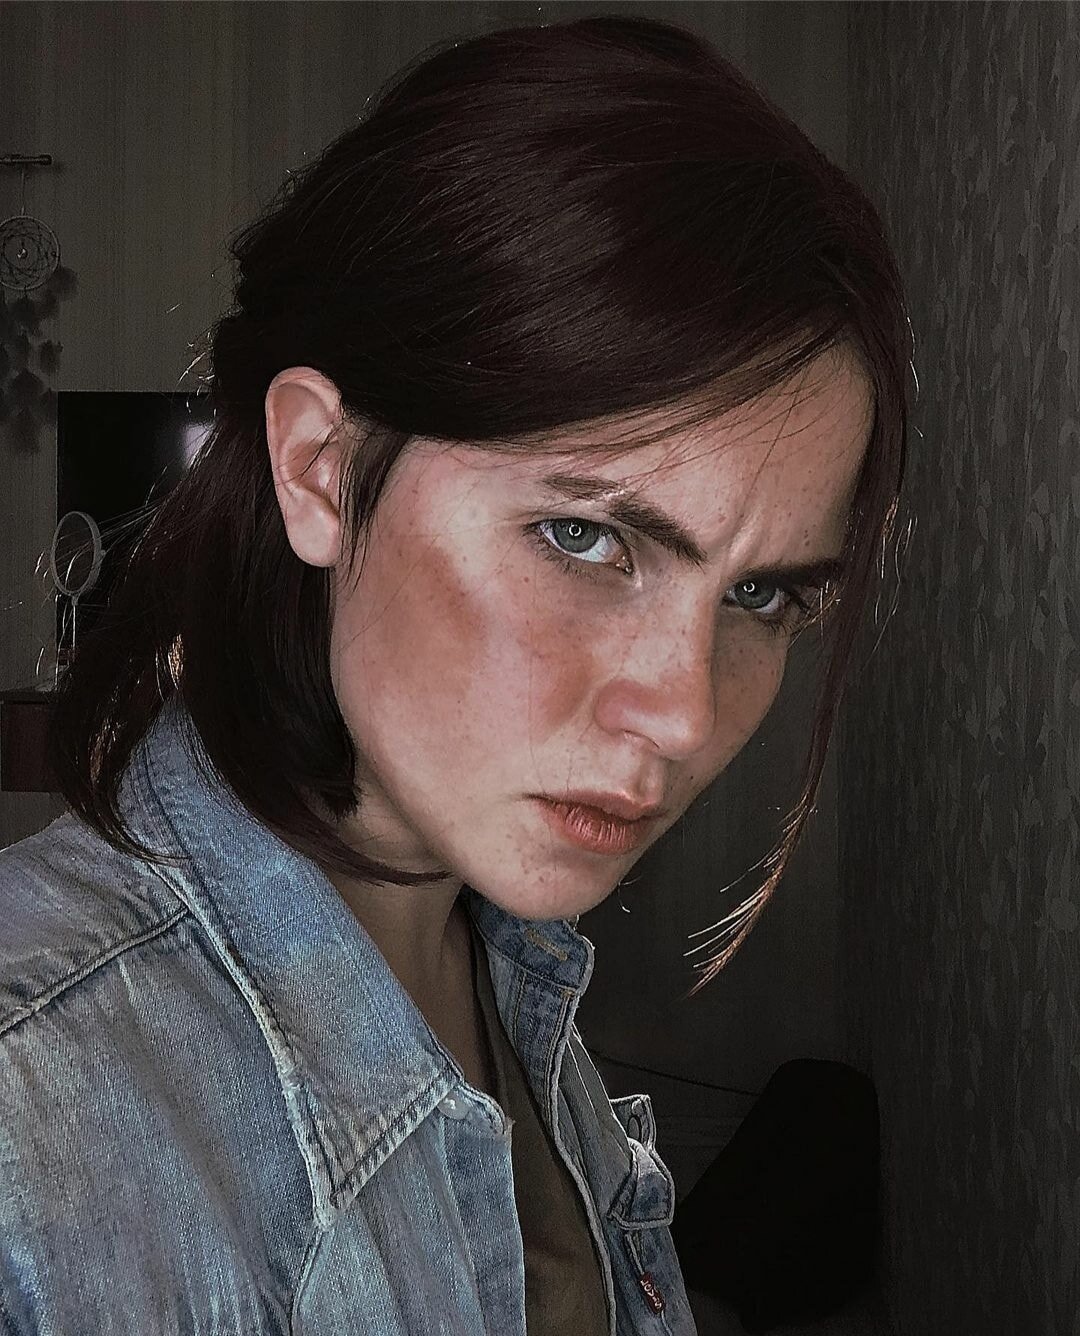 Cosplayer emociona ao homenagear Ellie de The Last of Us Part II em  incrível cosplay - Critical Hits